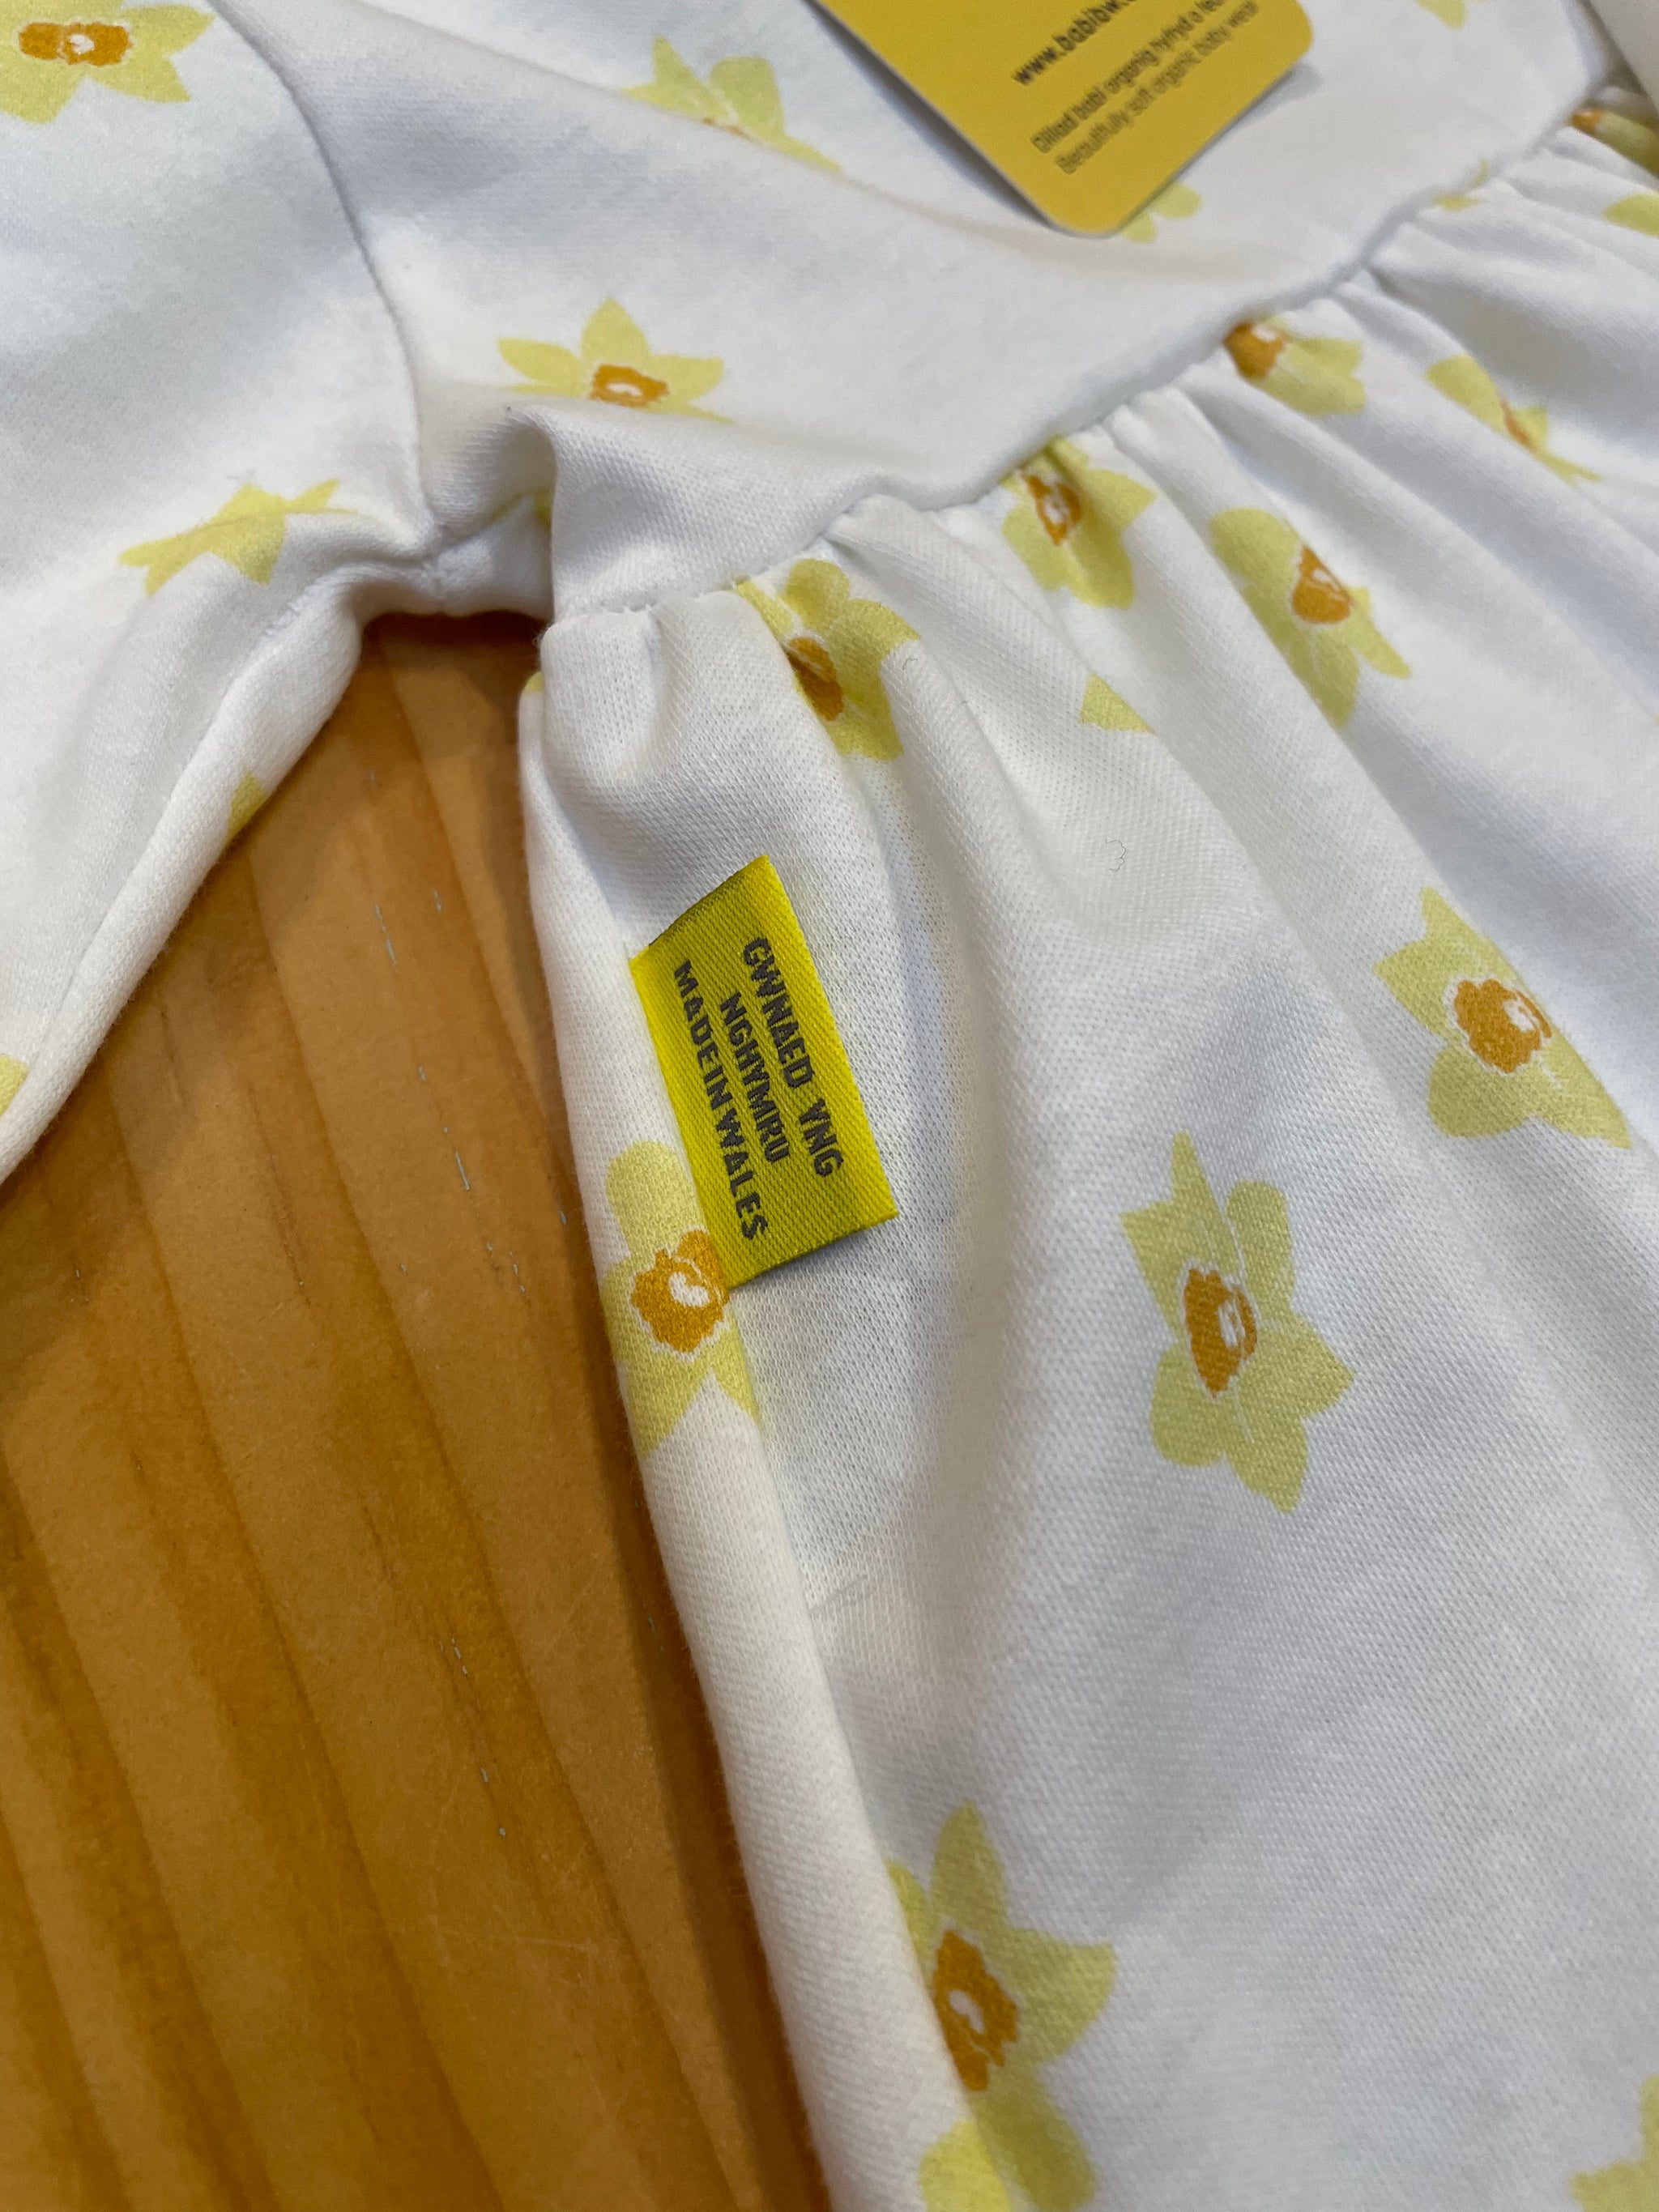 Babi Bw Welsh Daffodil Print Dress